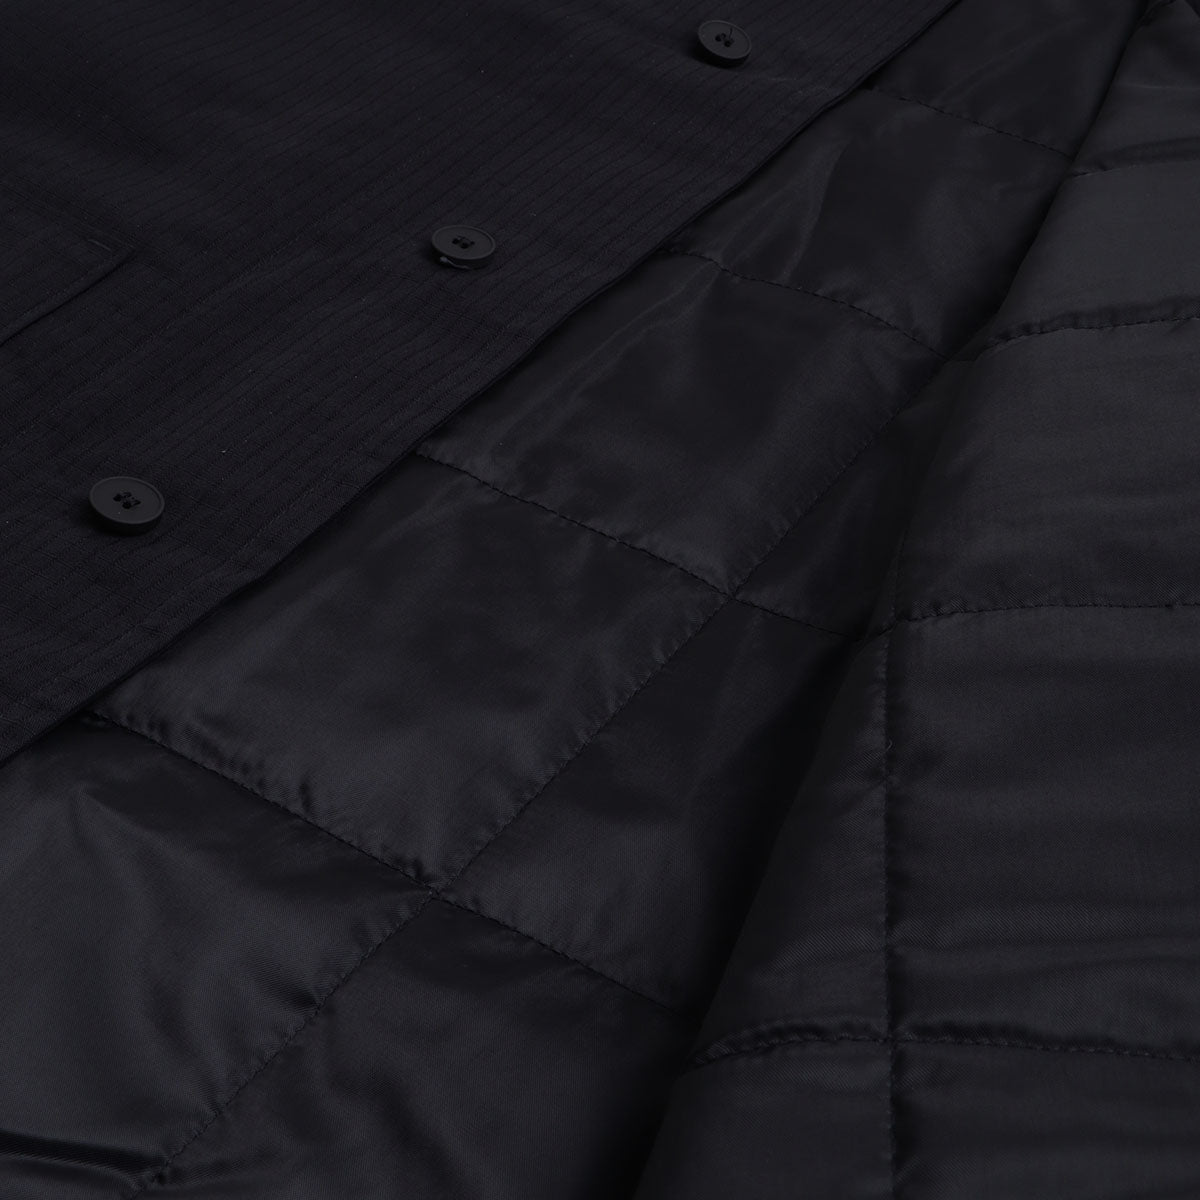 Adidas Originals Premium Essentials+ C FZ Jacket, Black, Detail Shot 5